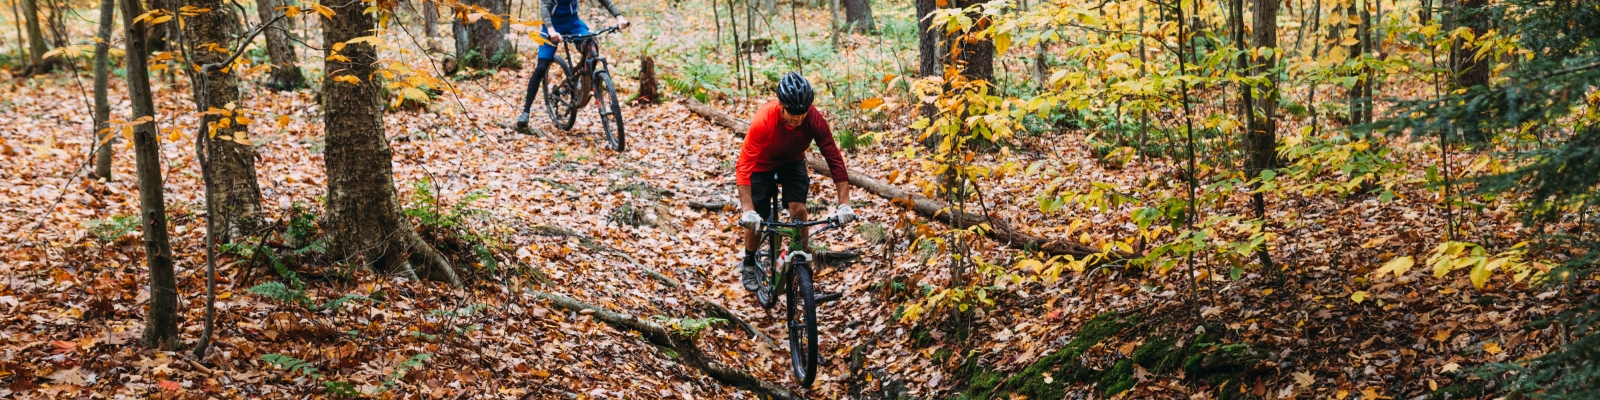 Mountain biking through Little Rock City State Forest - Autumn